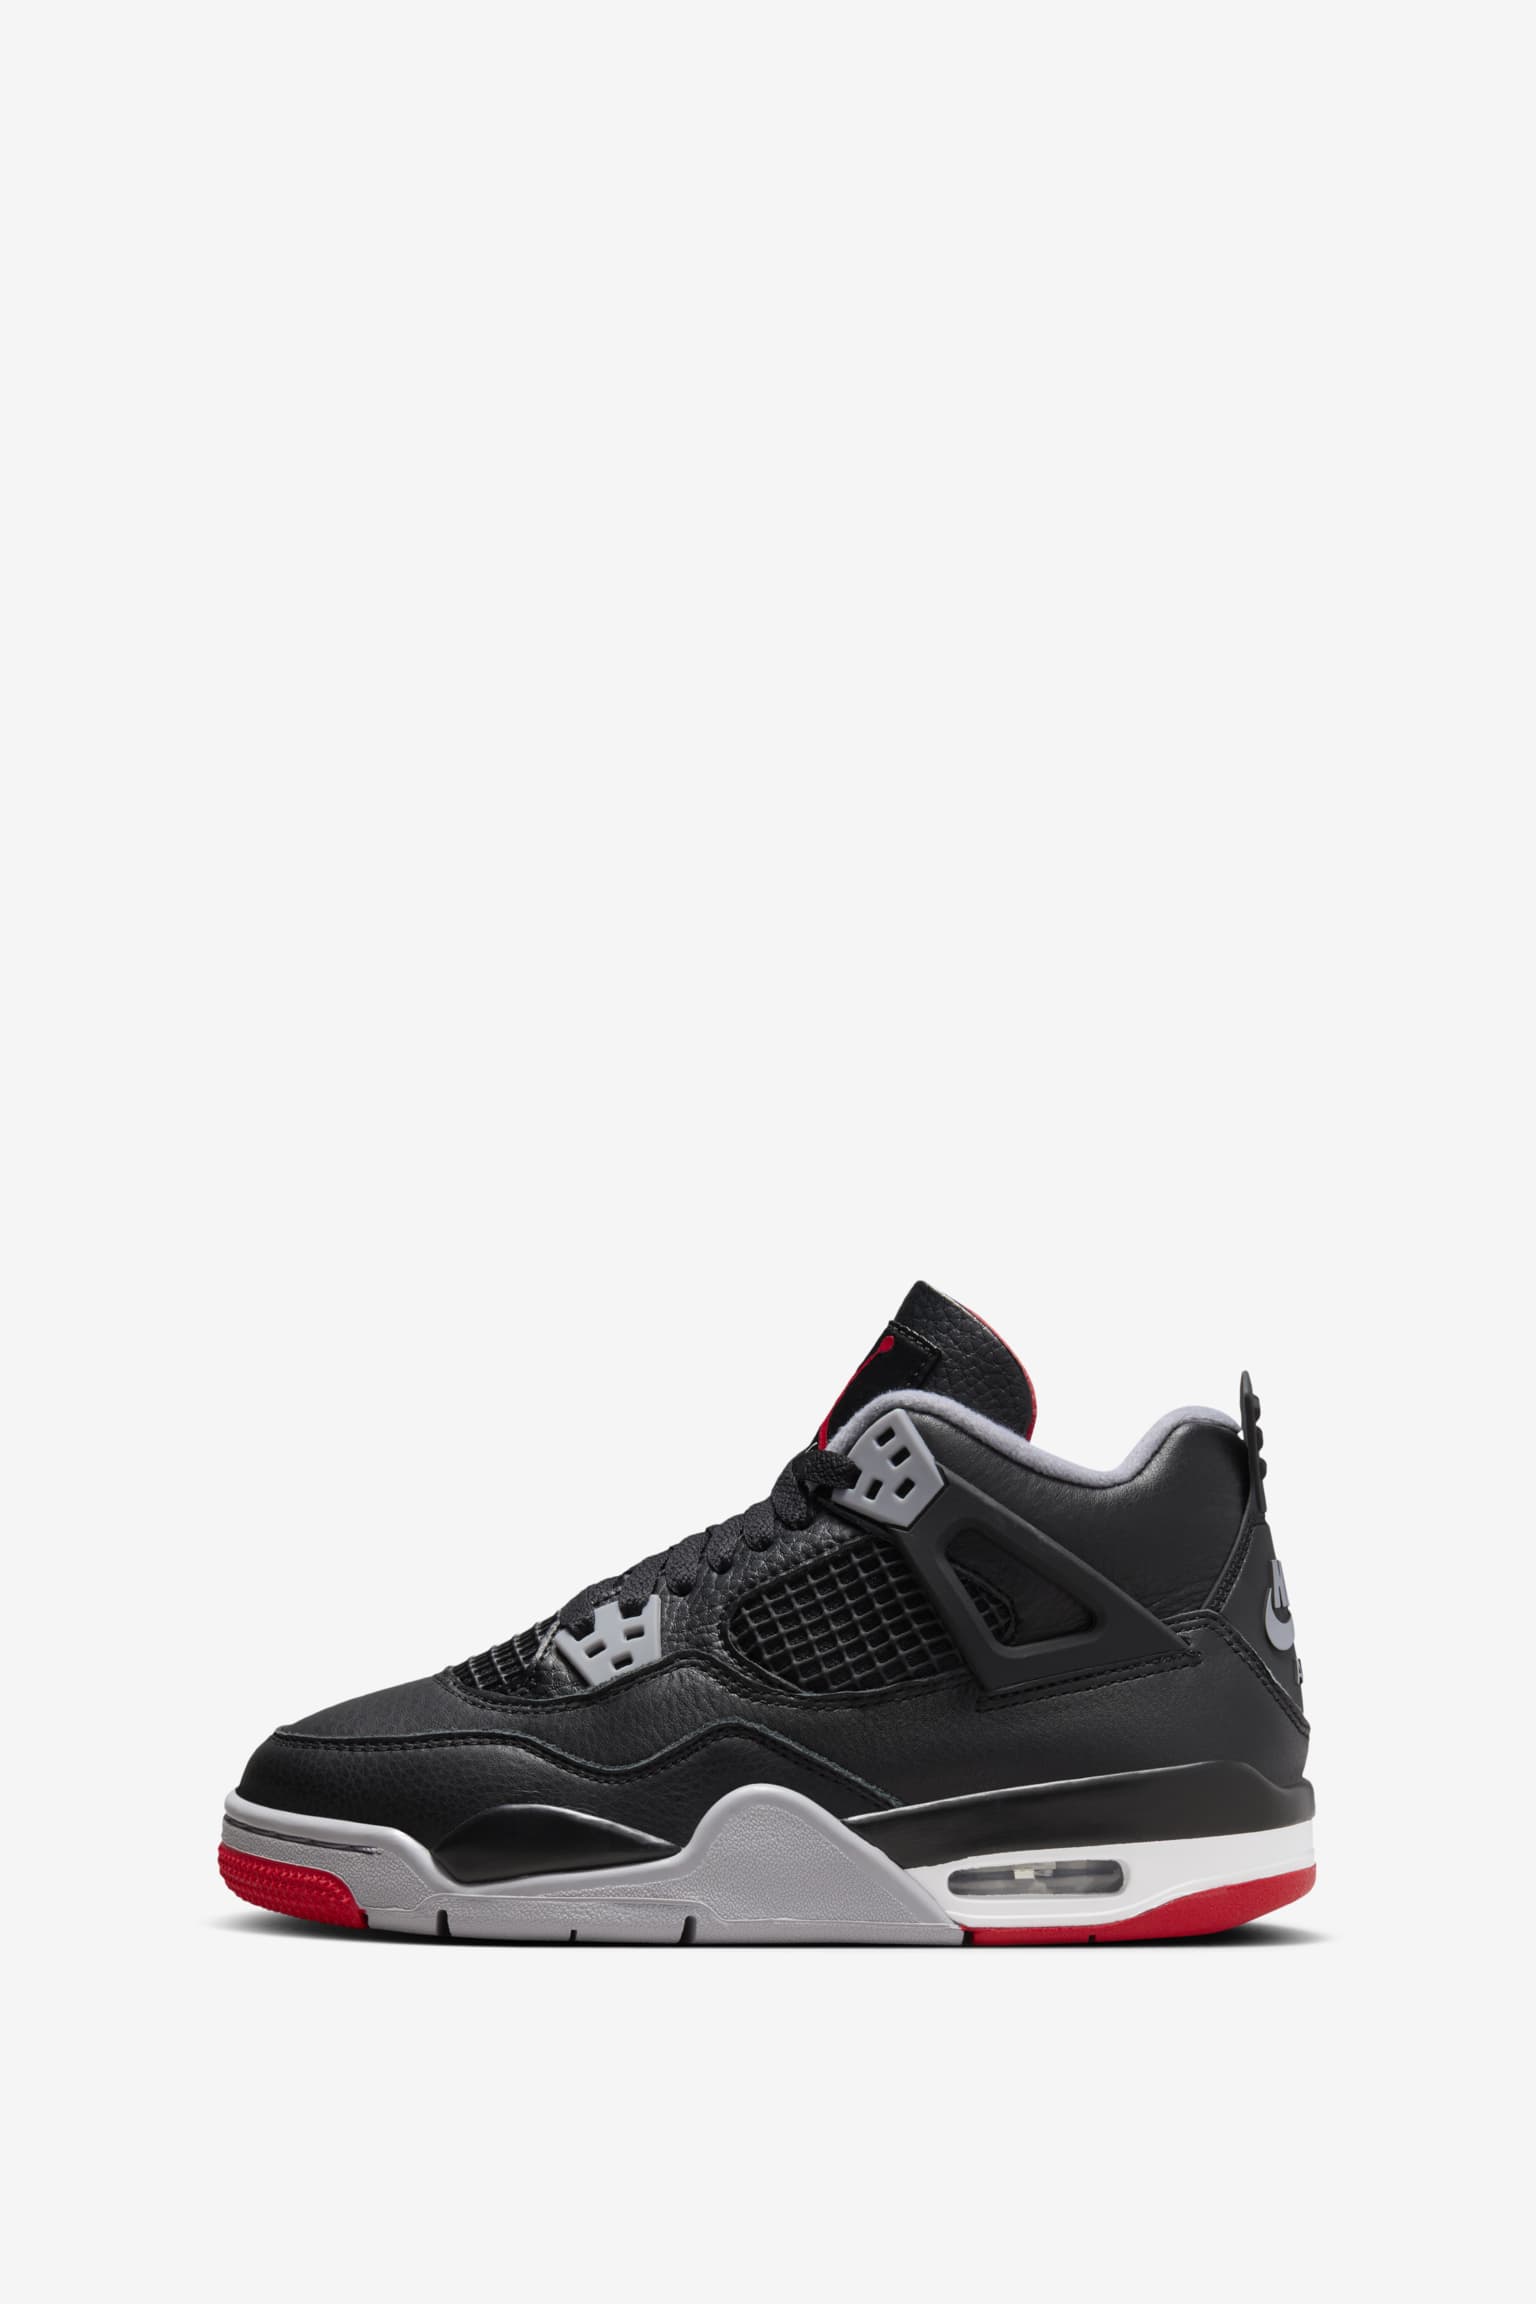 Air Jordan 4 'Bred Reimagined' (FV5029-006) release date. Nike